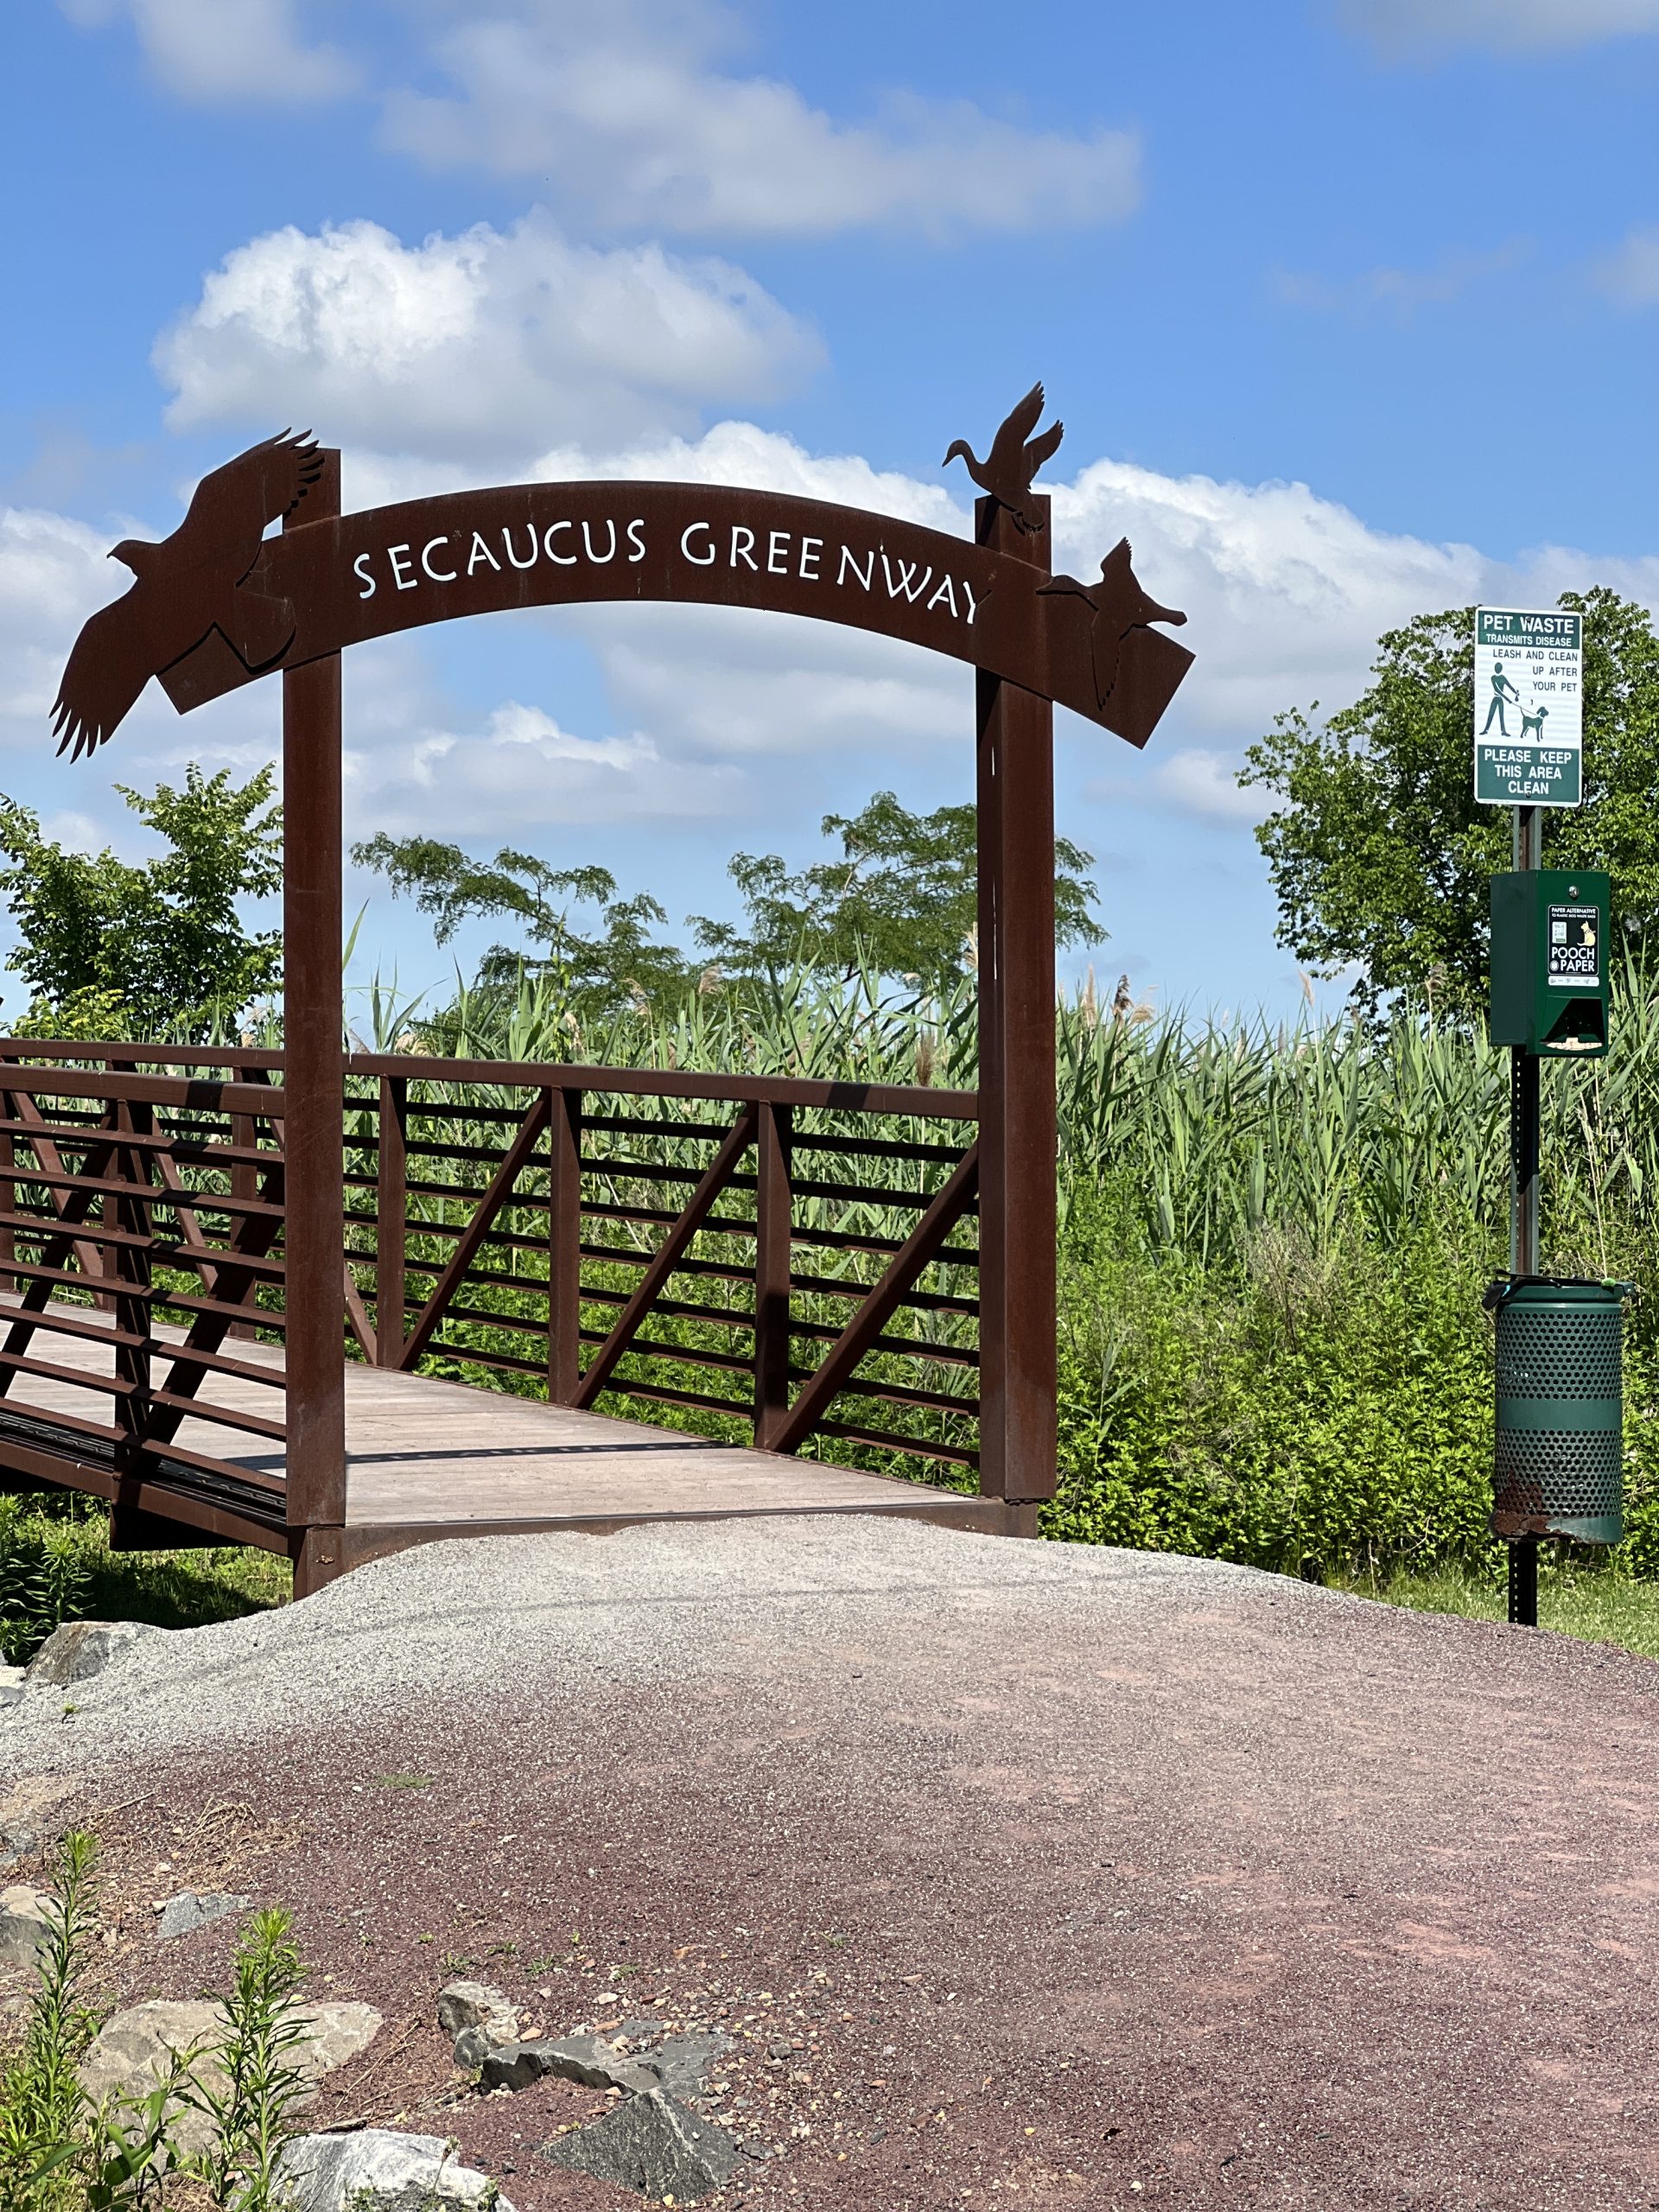 Mill Creek Point Park Secaucus Greenway walking path and bridge in Secaucus NJ